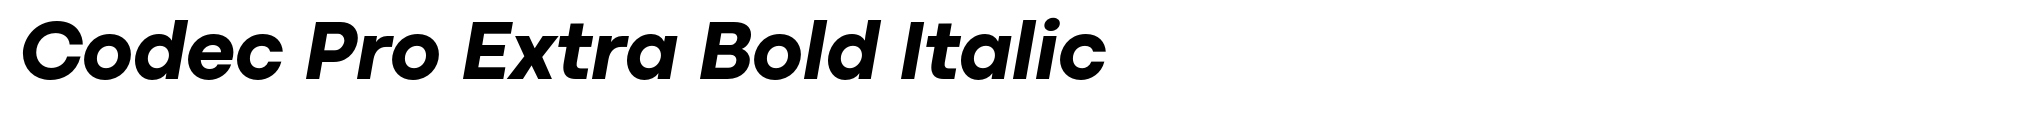 Codec Pro Extra Bold Italic image